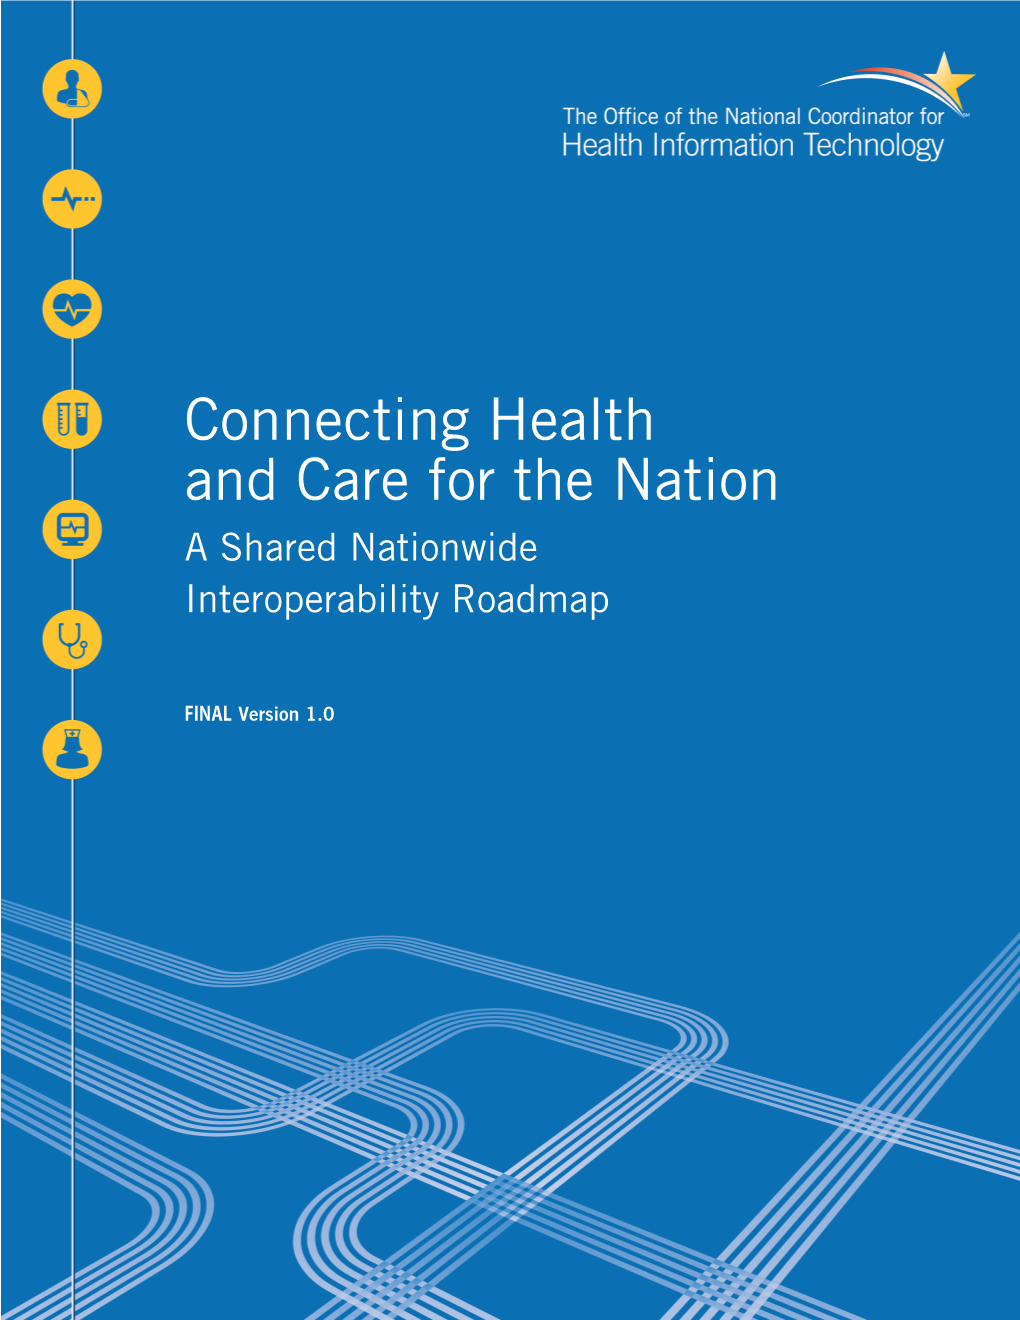 A Shared Nationwide Interoperability Roadmap